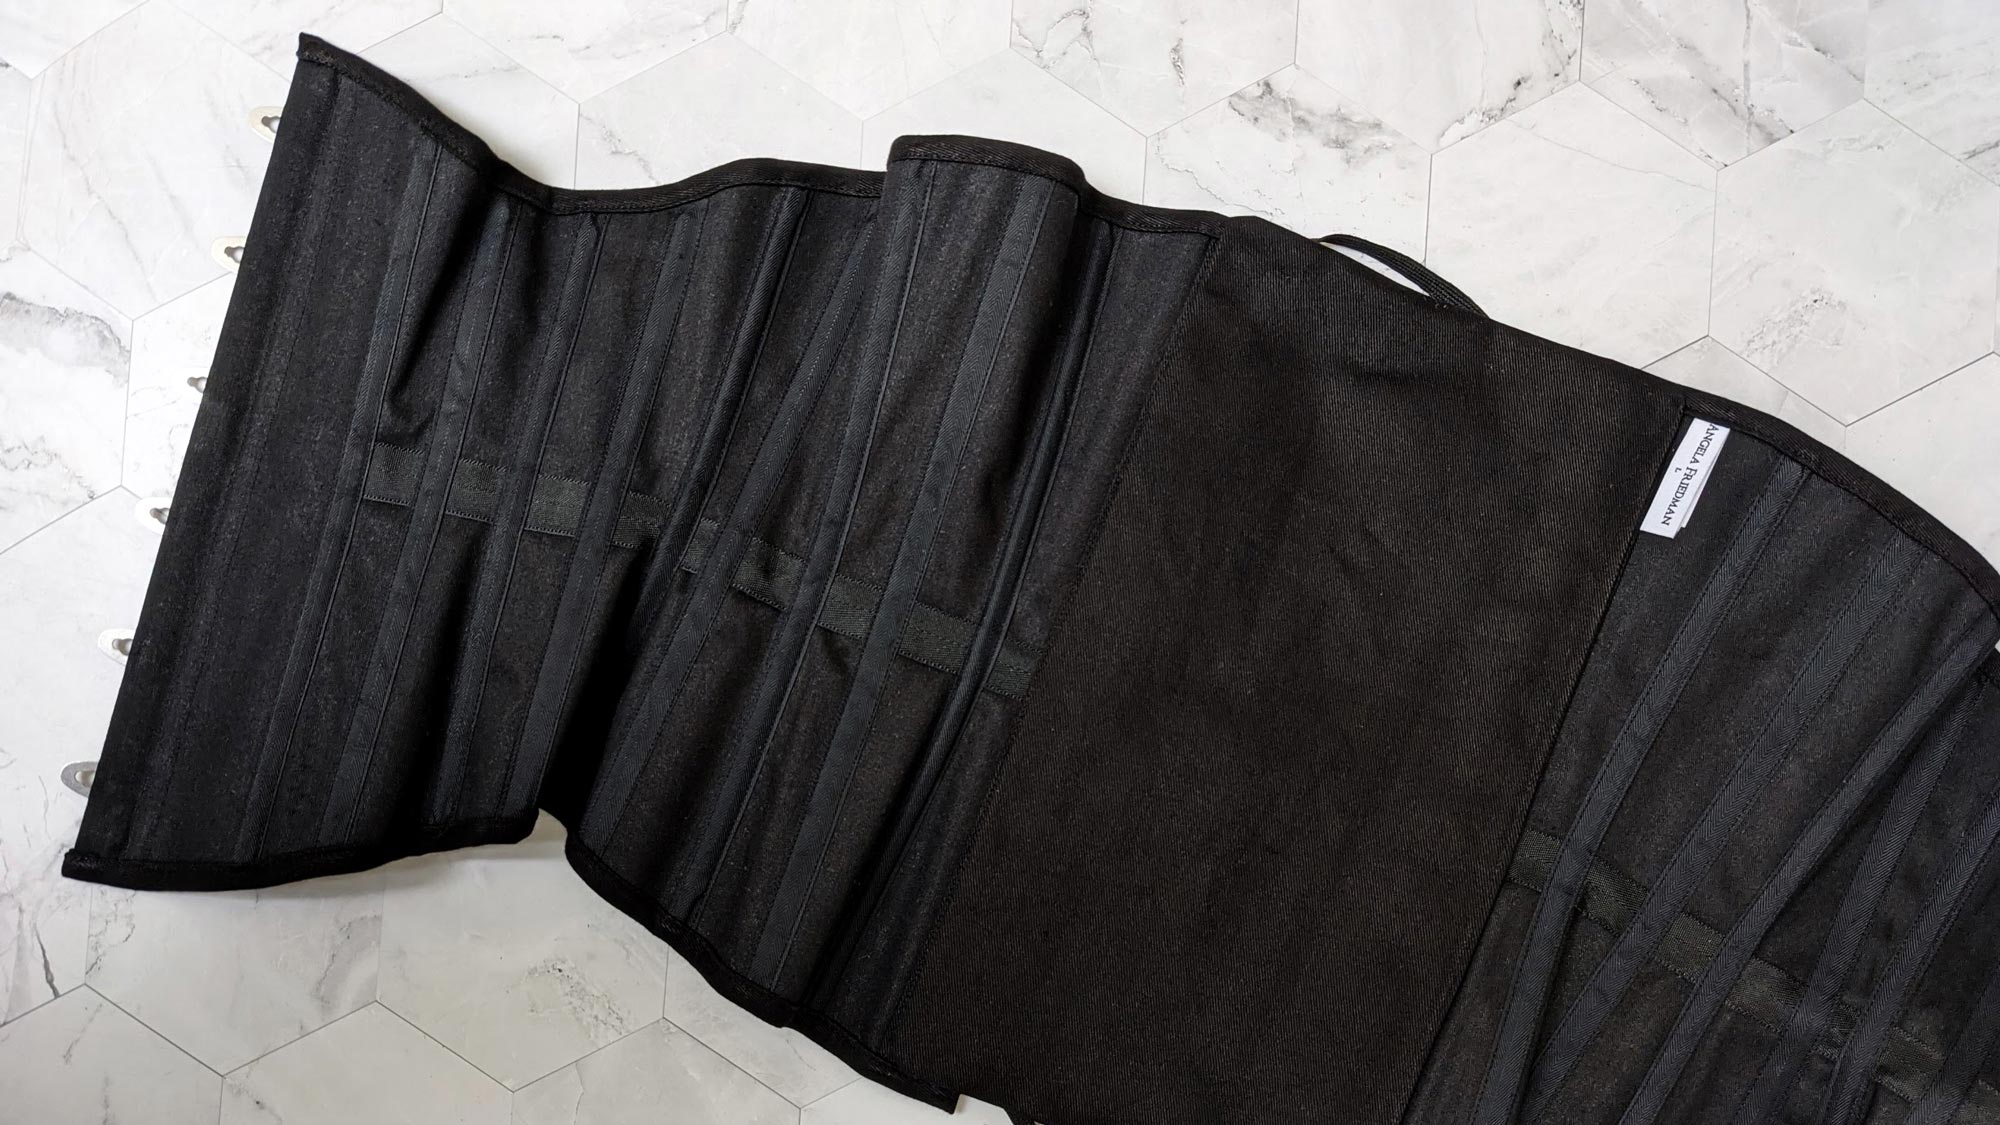 Black cotton underbust corset, showing the interior boning channels with steel bones